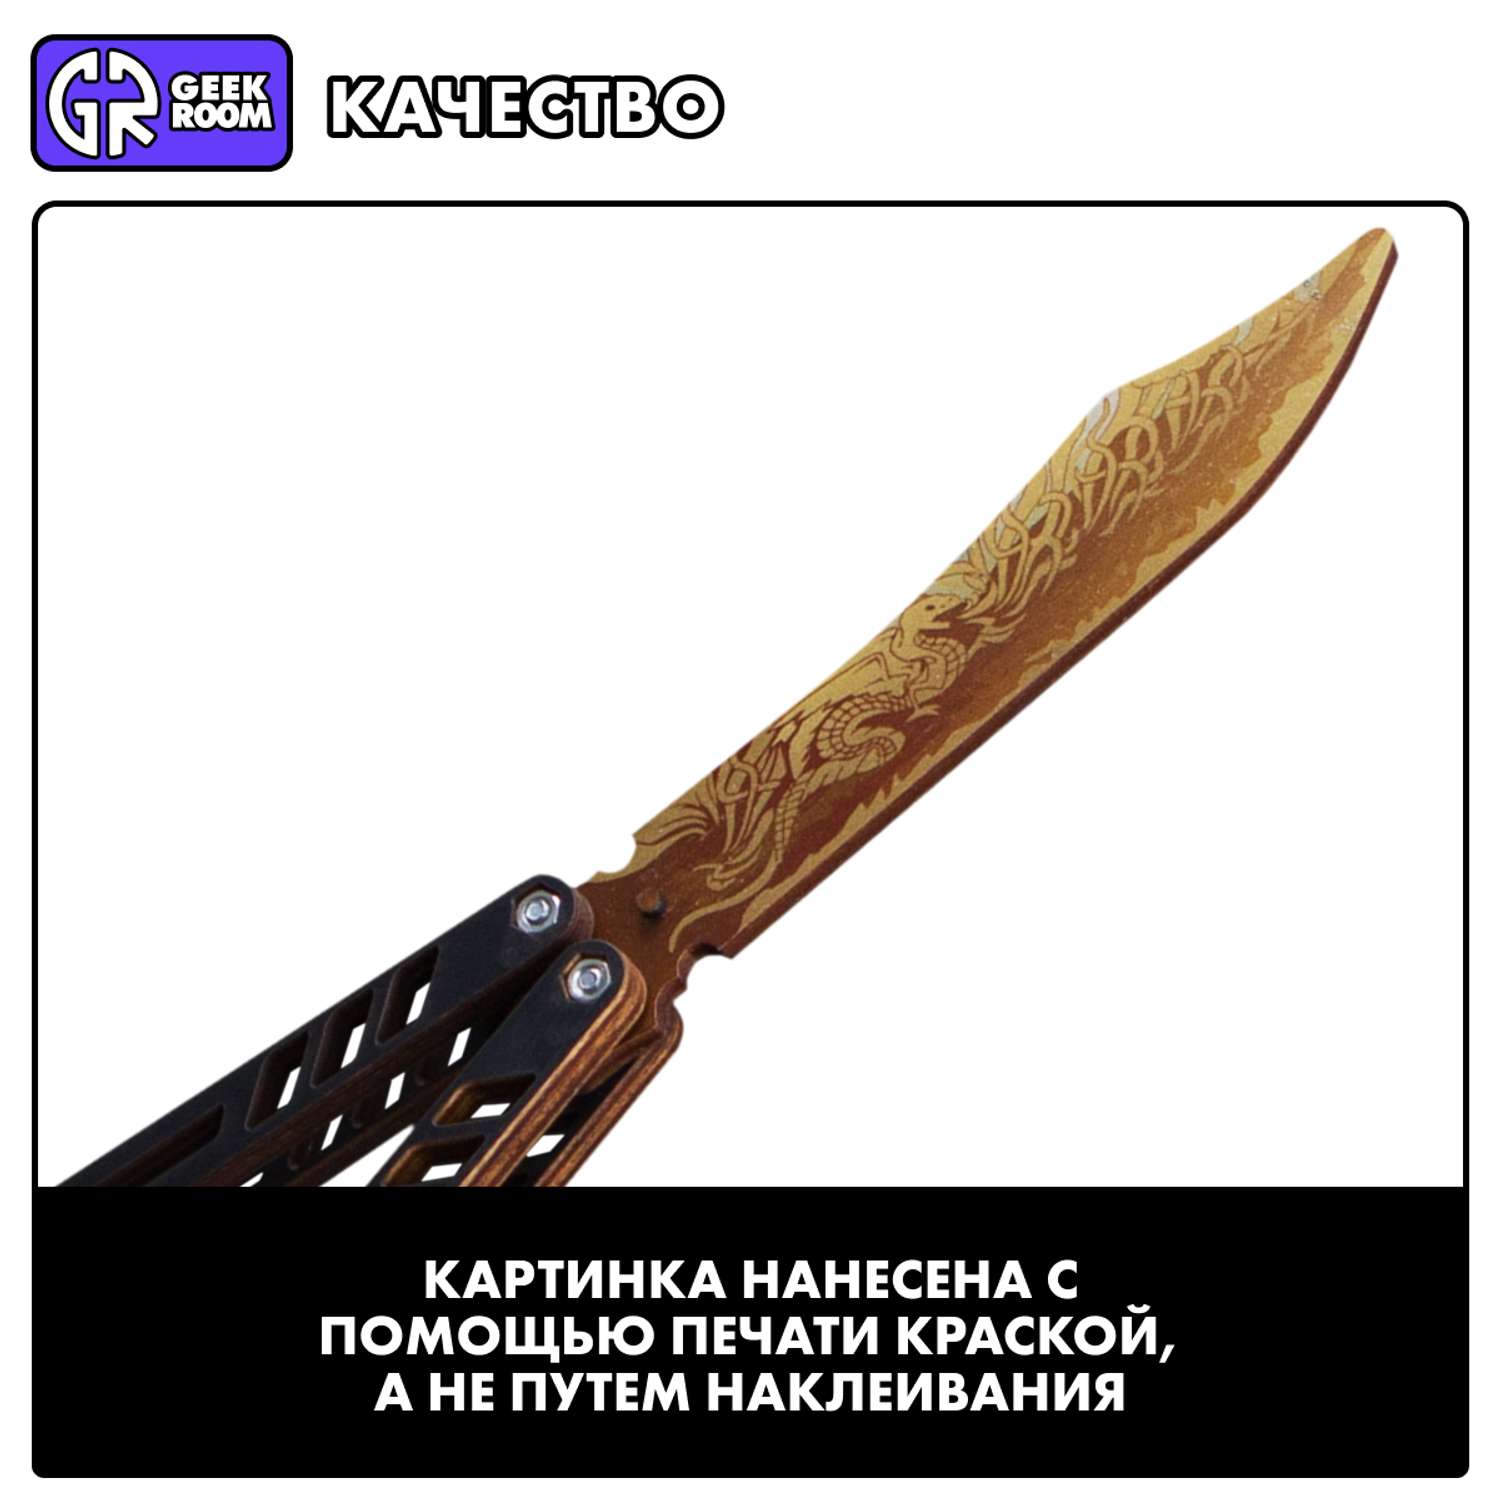 Нож бабочка GEEKROOM Legacy деревянный сувенирный - фото 8